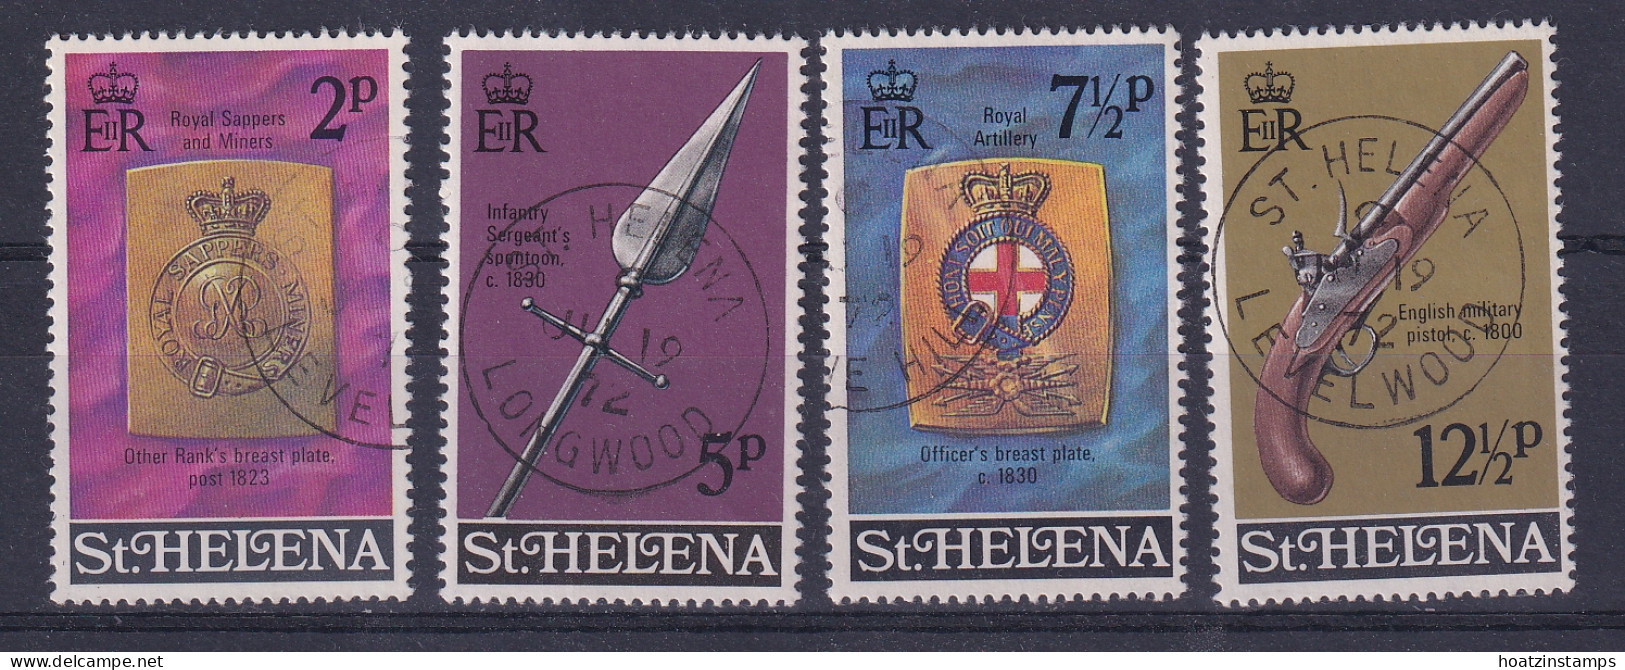 St Helena: 1972   Military Equipment (Issue 3)    Used - Sainte-Hélène